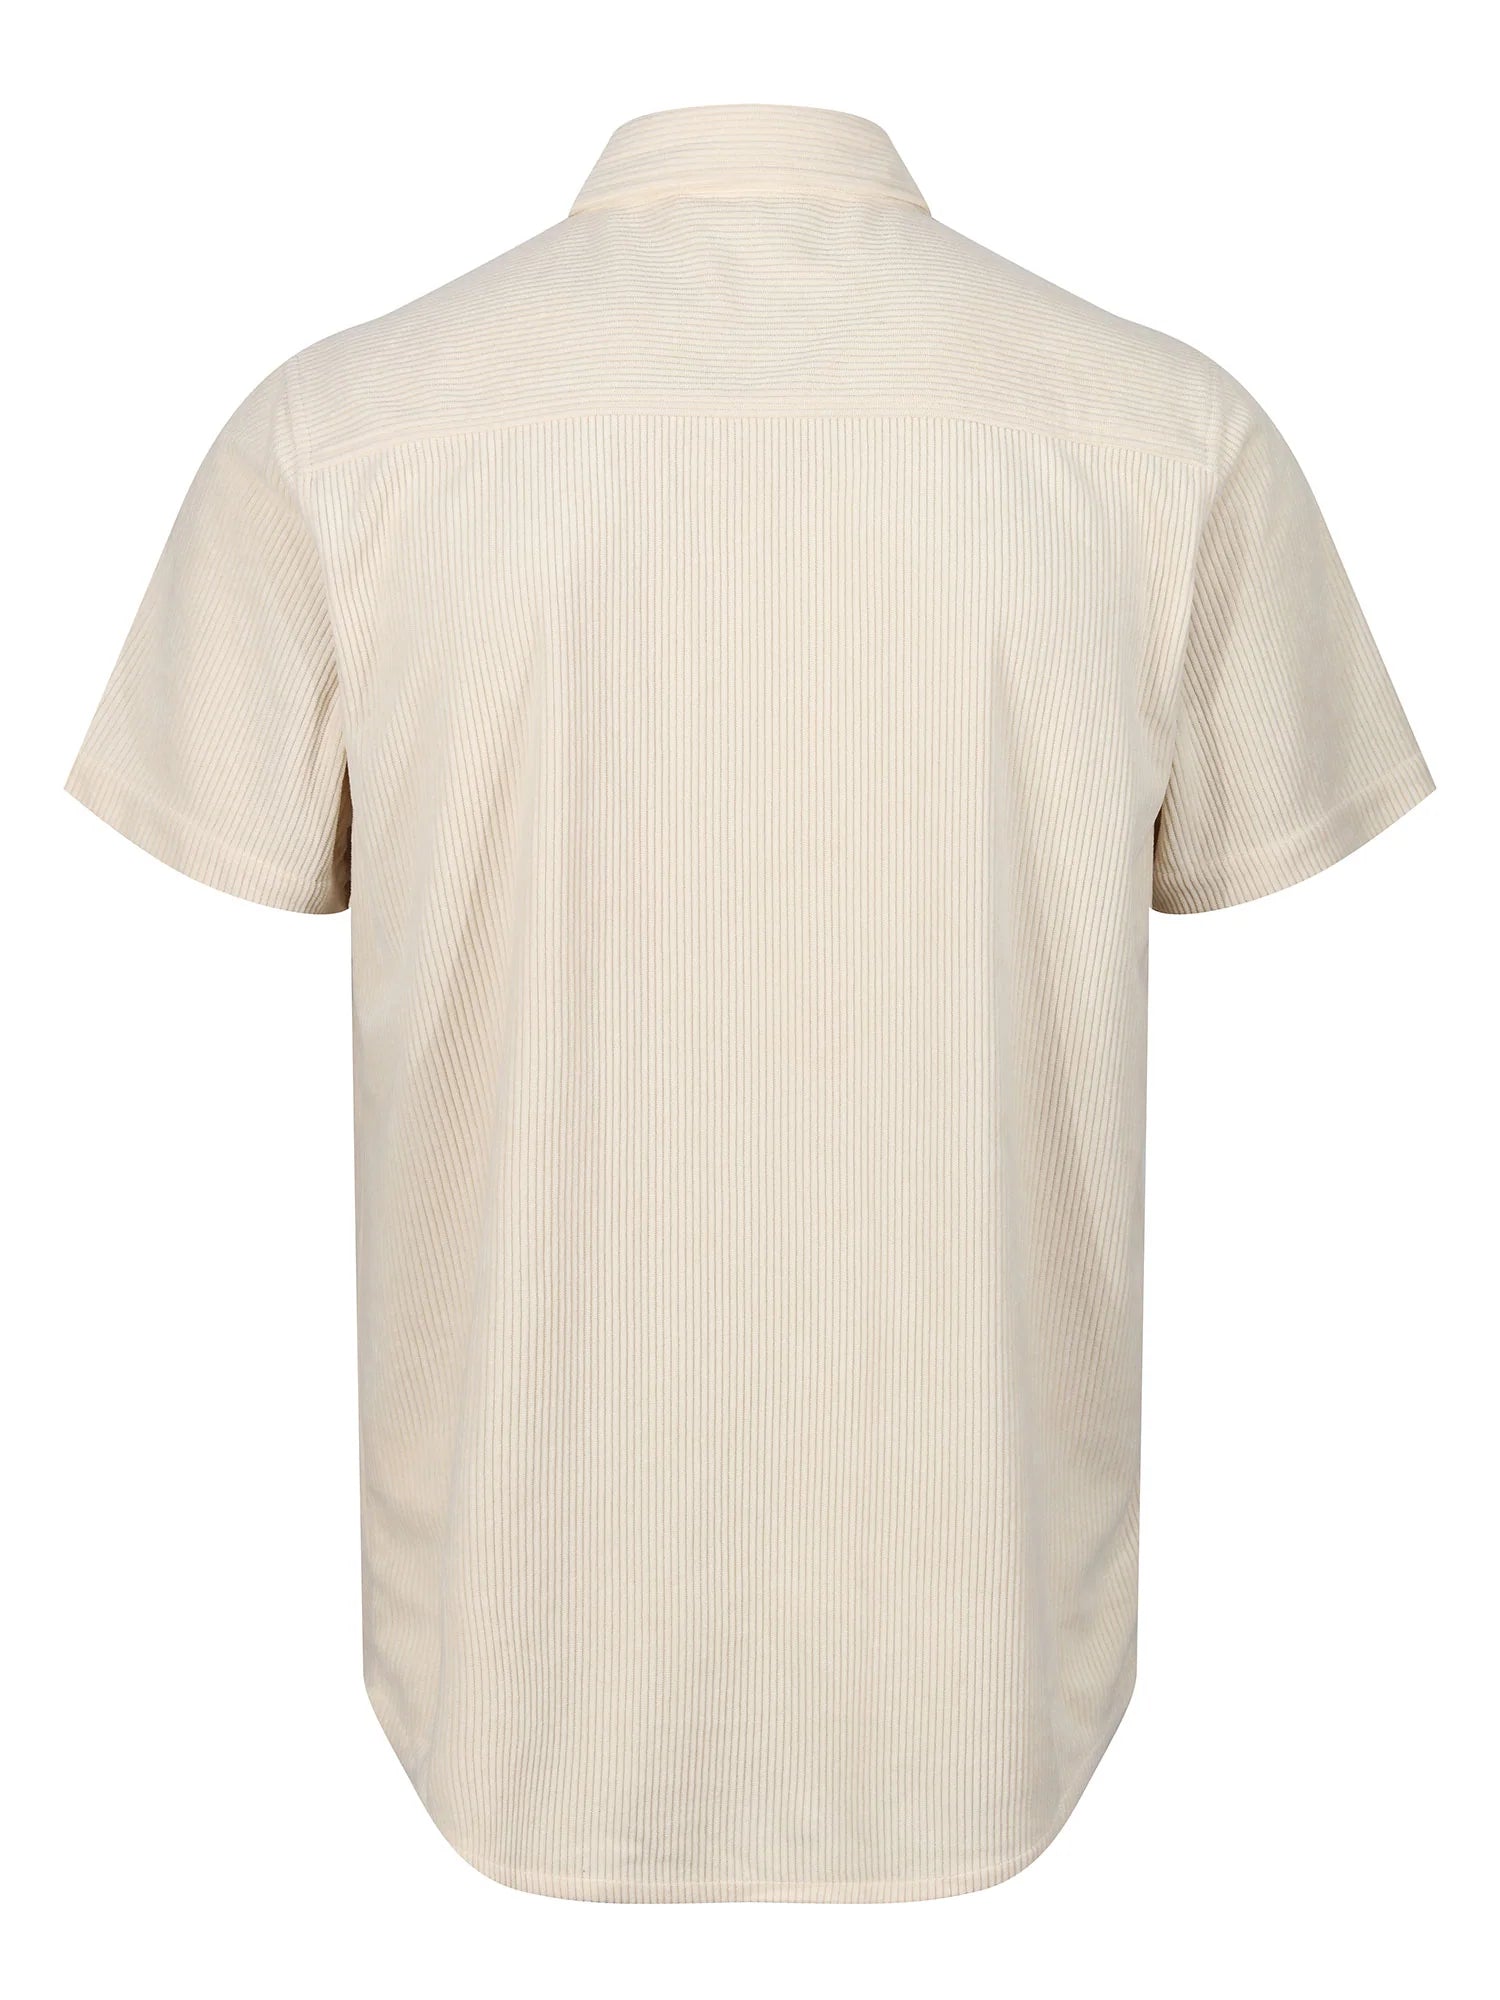 Luke Caicos Island Shirt Ecru